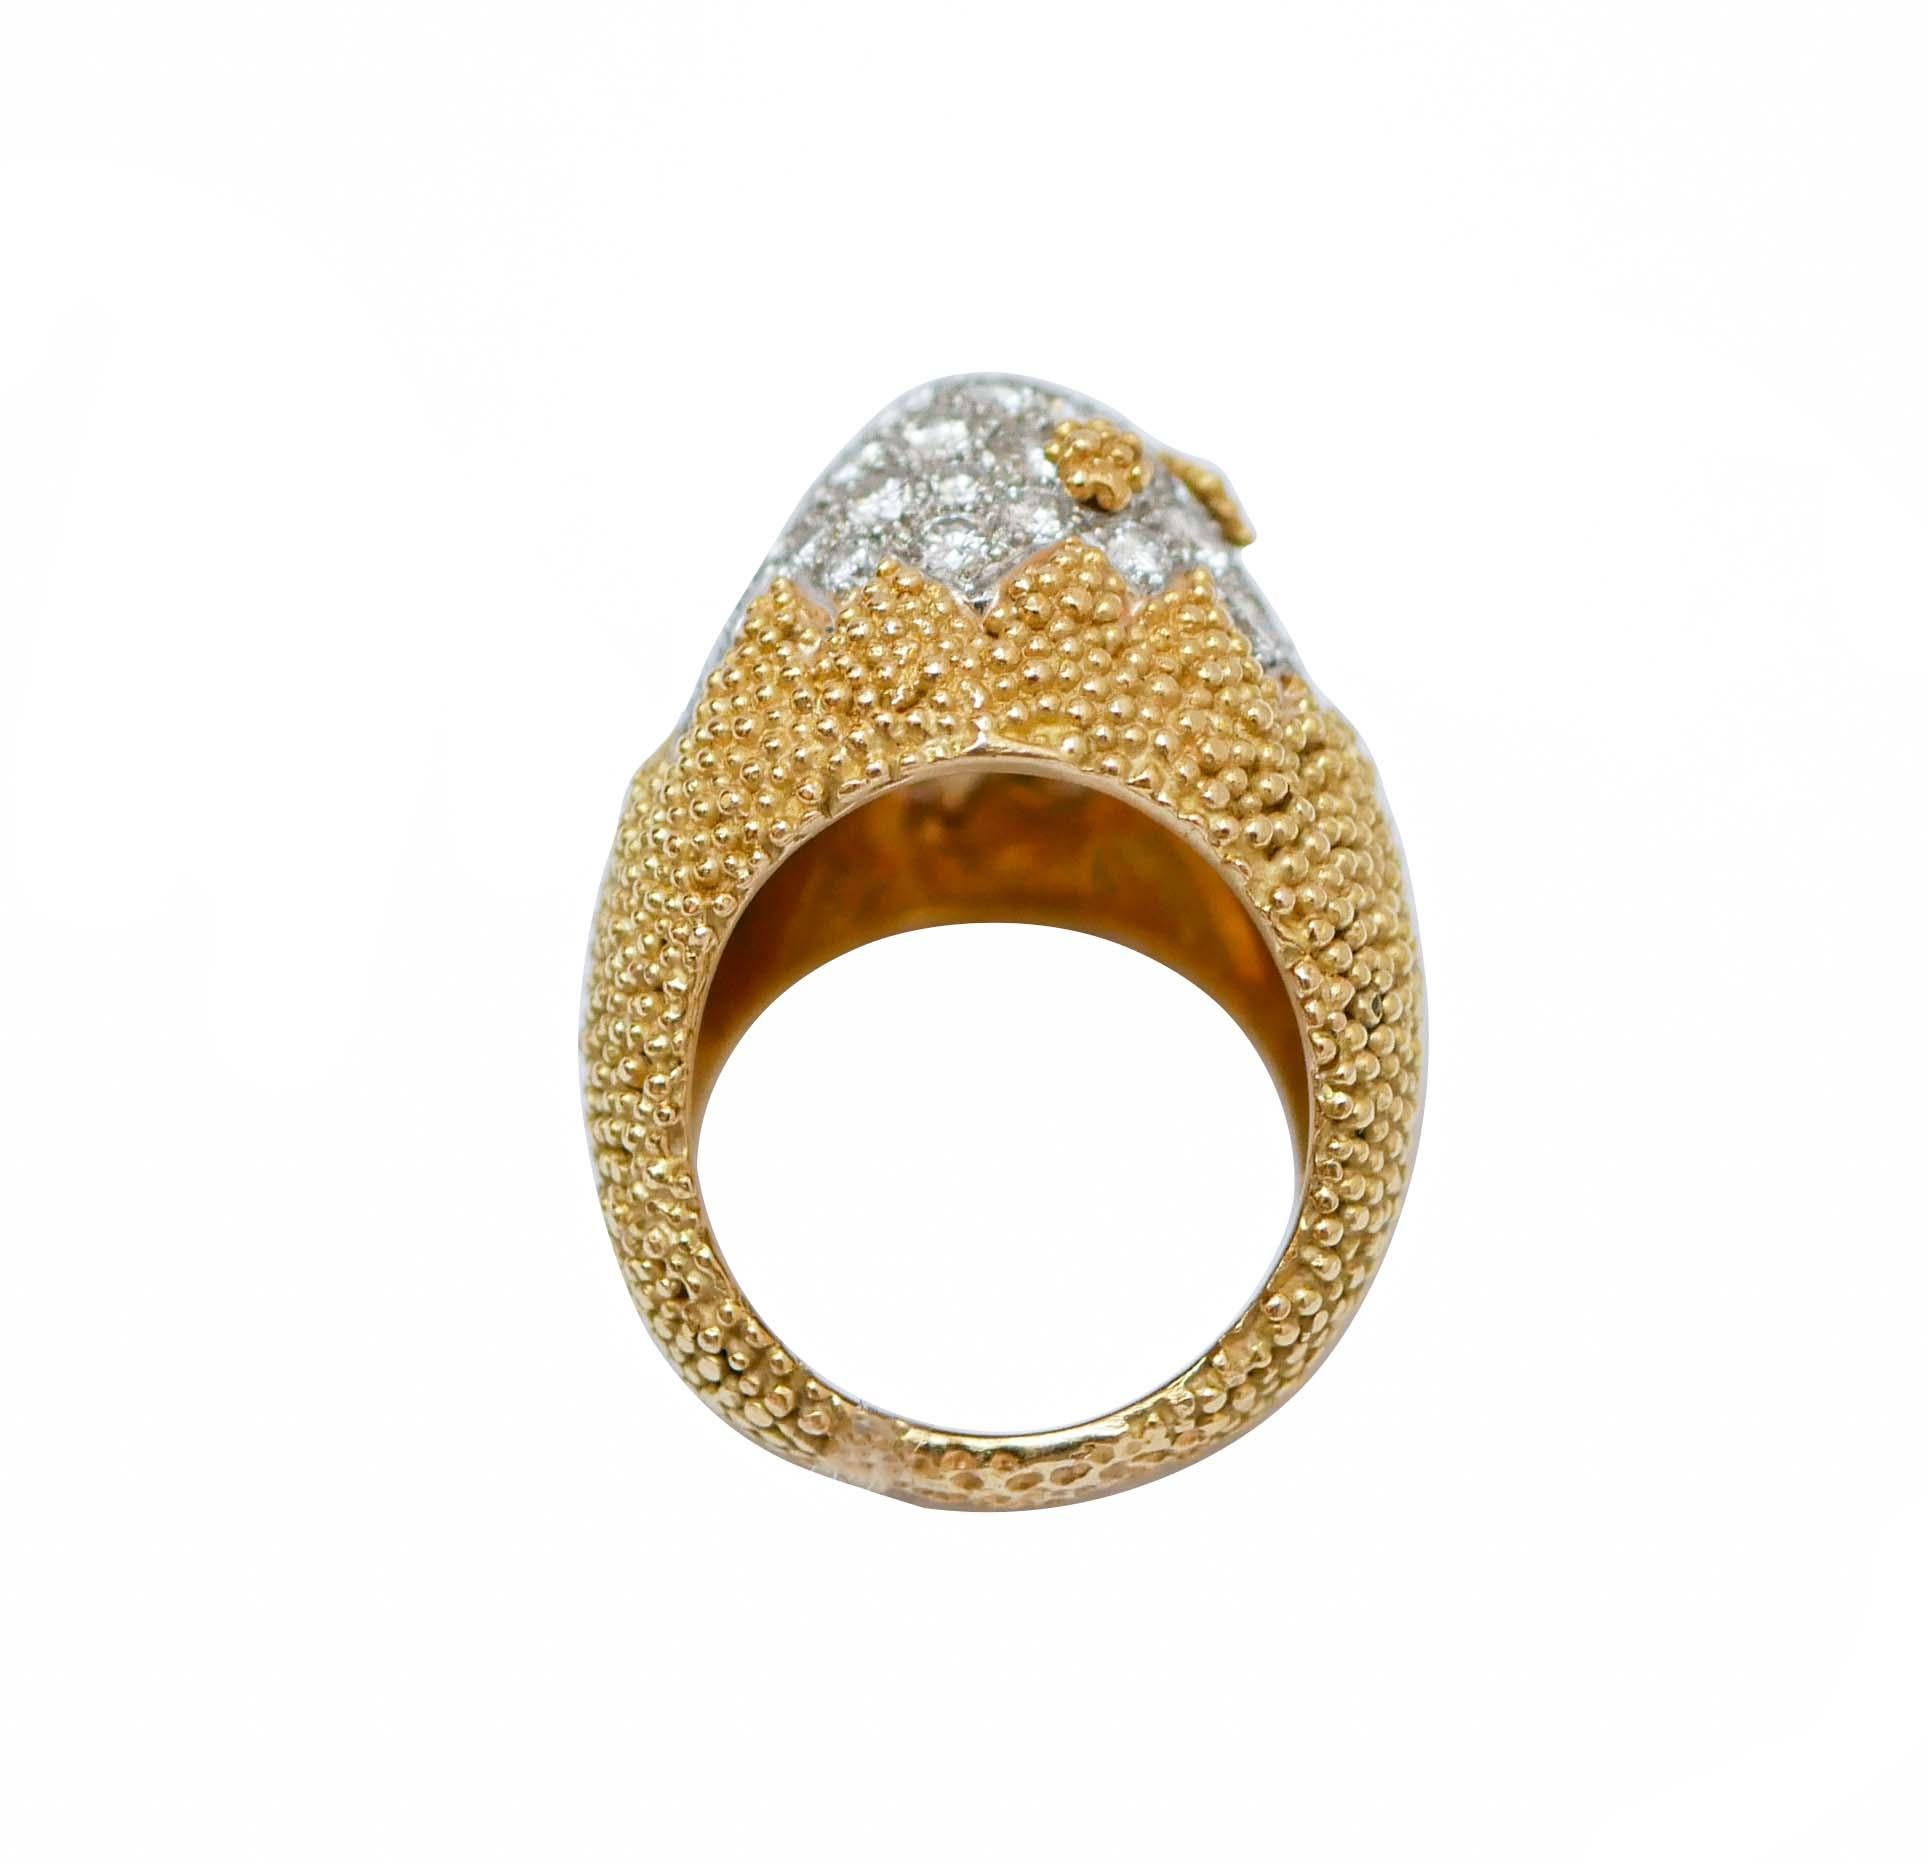 Retro Diamonds, 18 Karat Yellow Gold and White Gold Dome Ring.